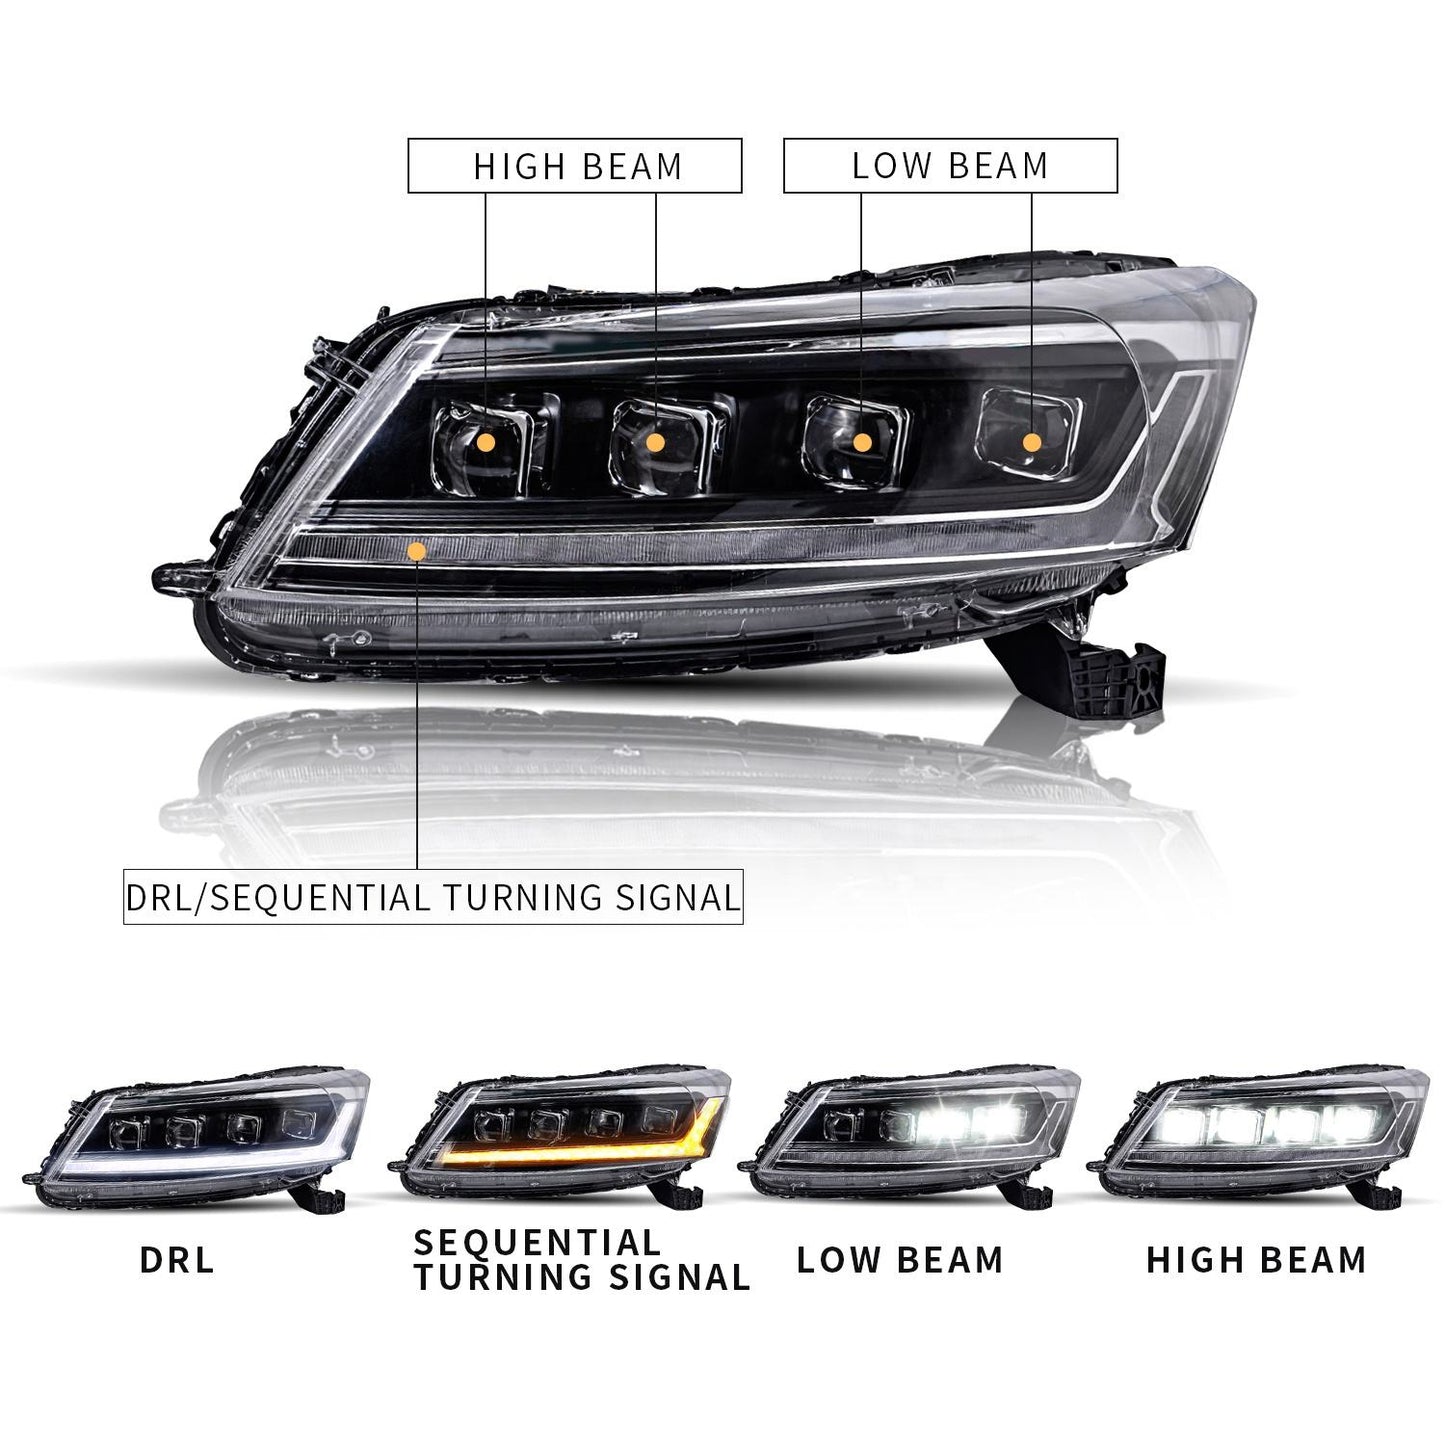 Full LED Headlights Assembly For 8th Gen Honda Accord 2008-2012